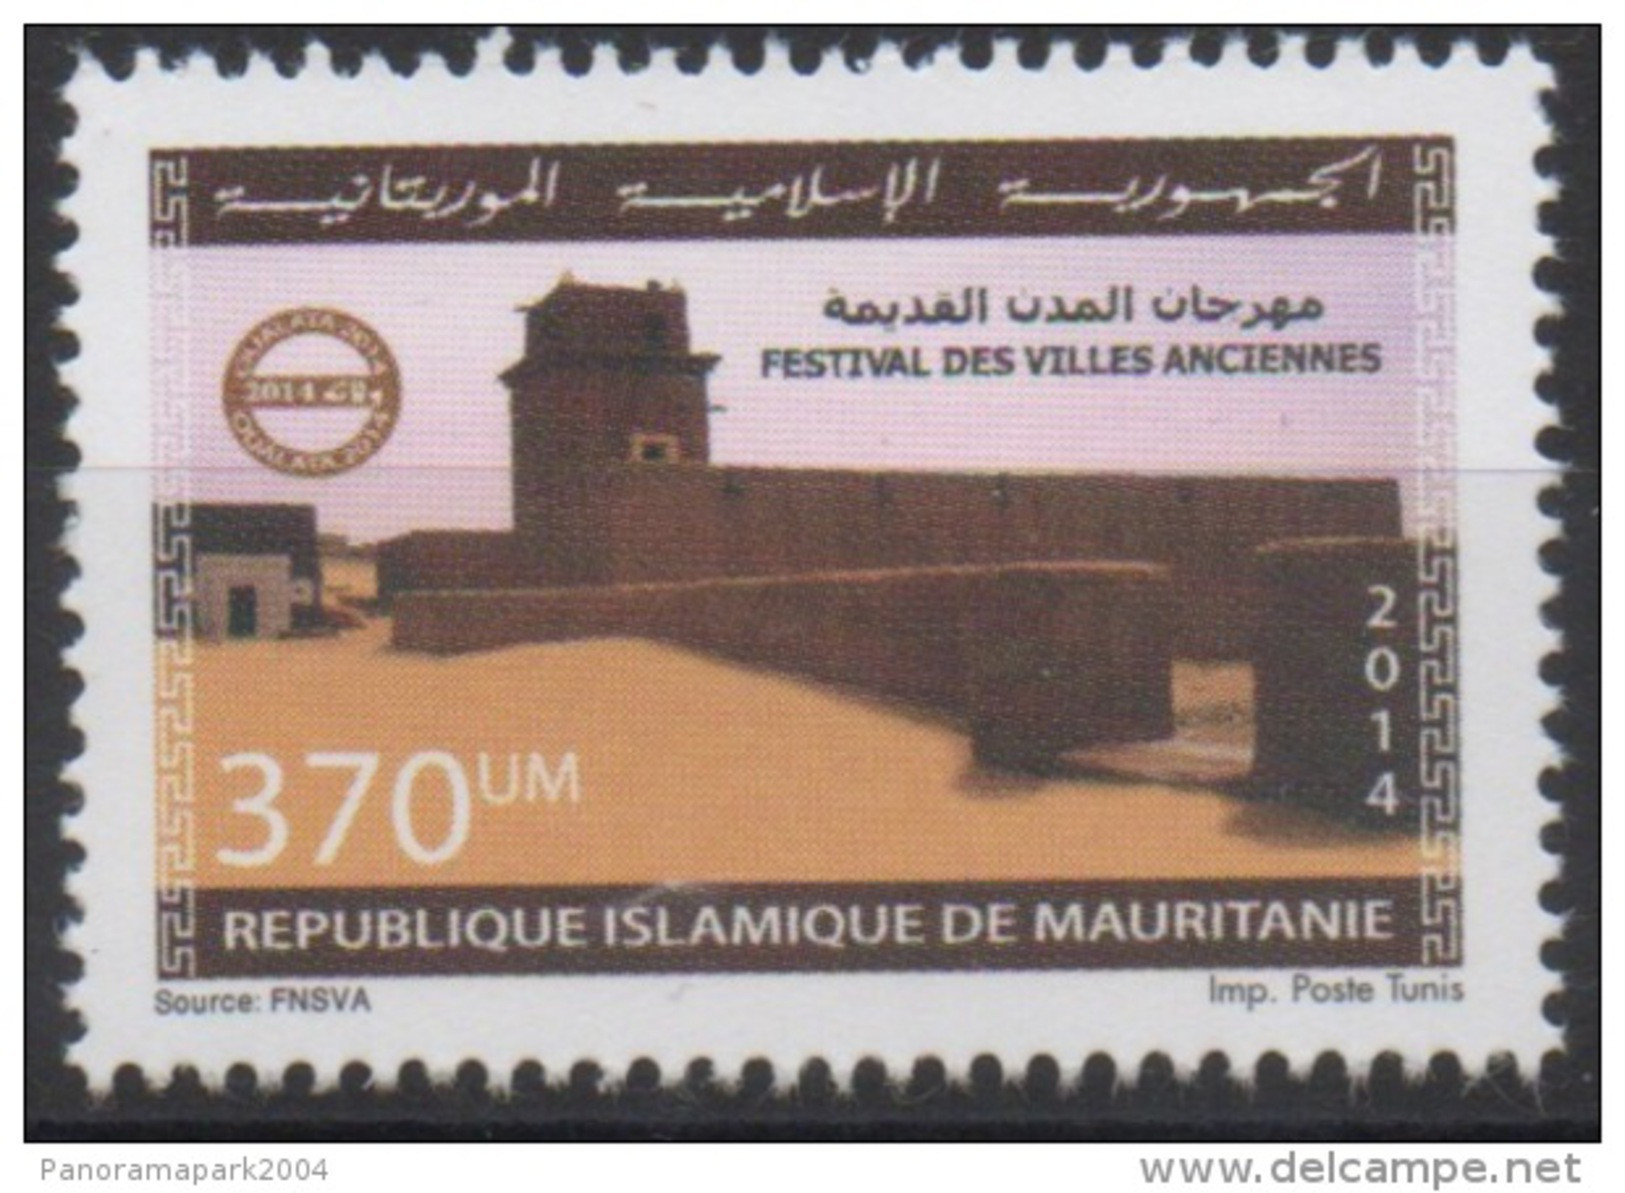 Mauritanie Mauretanien Mauritania 2014 Mi. 1215 Festival Des Villes Anciennes Alte Stadt Oulata Walata MNH ** - Mauritanie (1960-...)